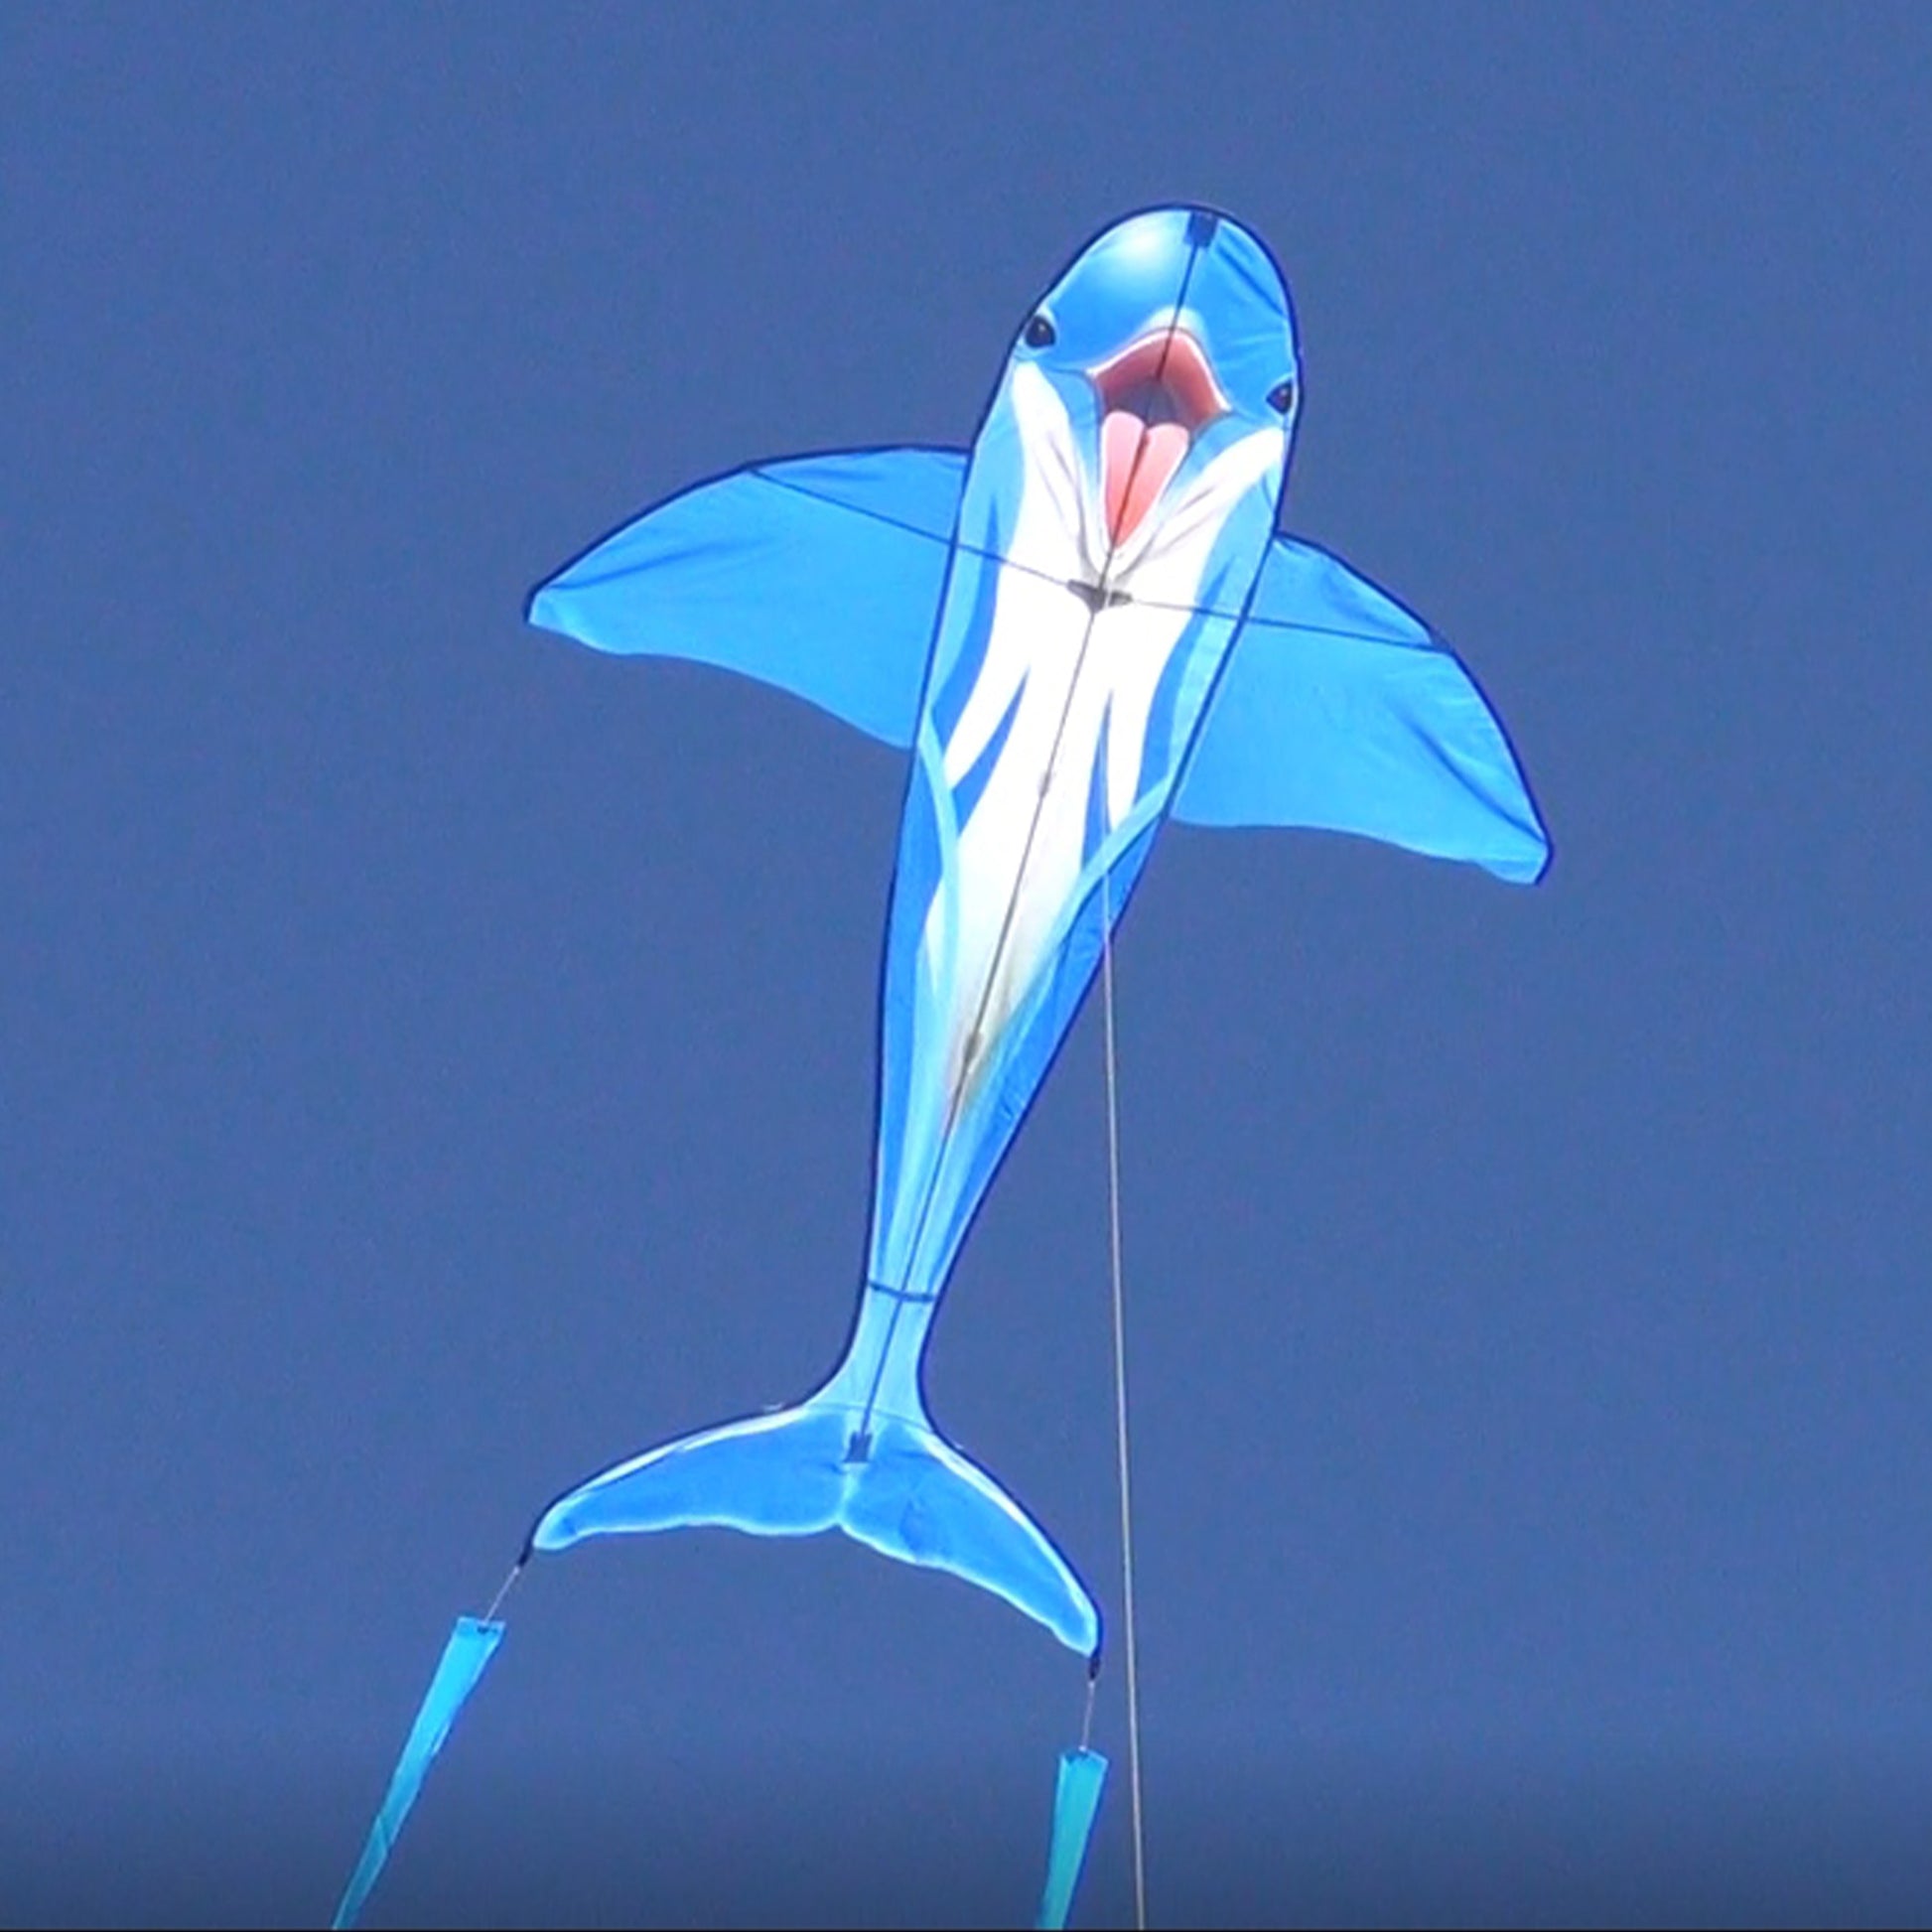 windnsun sealife dolphin nylon kite flying